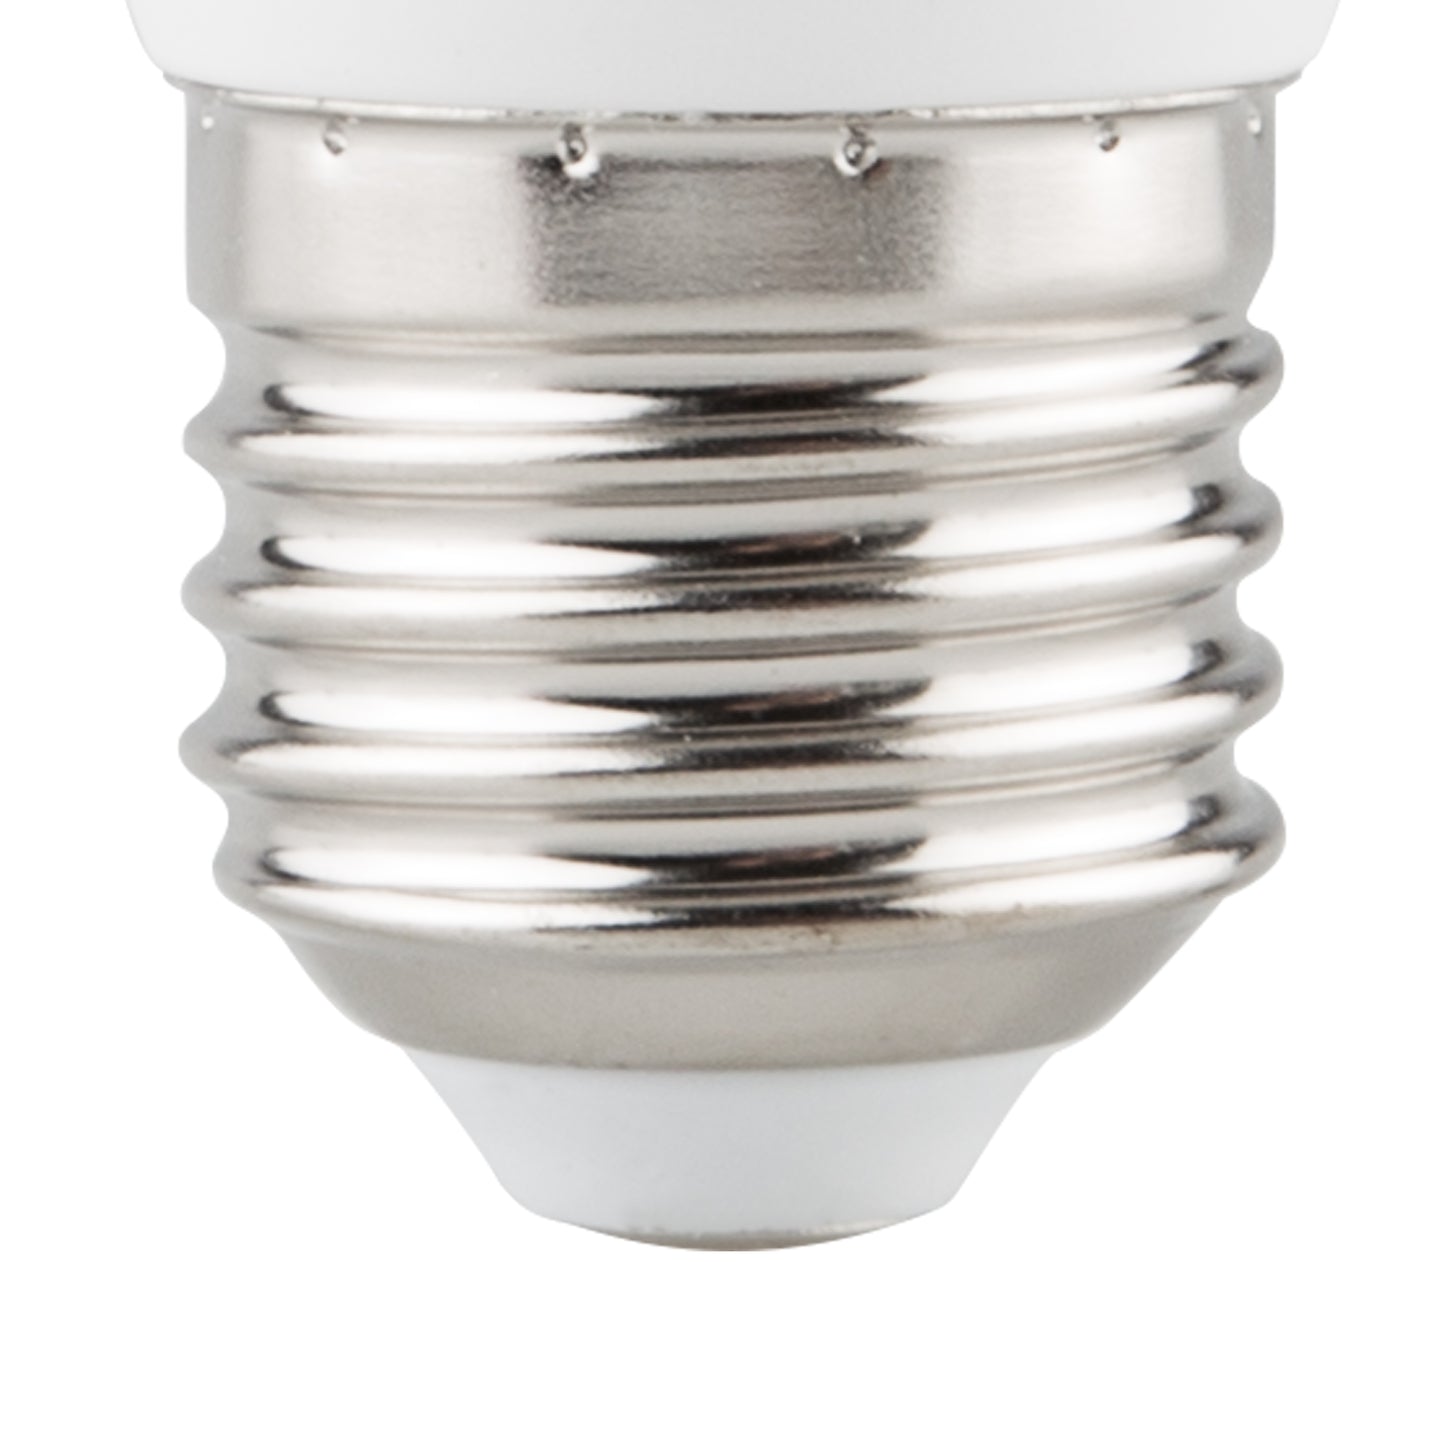 LAMPE REFLECTEUR LED SAMSUNG E27 R90 14W CHAUD 